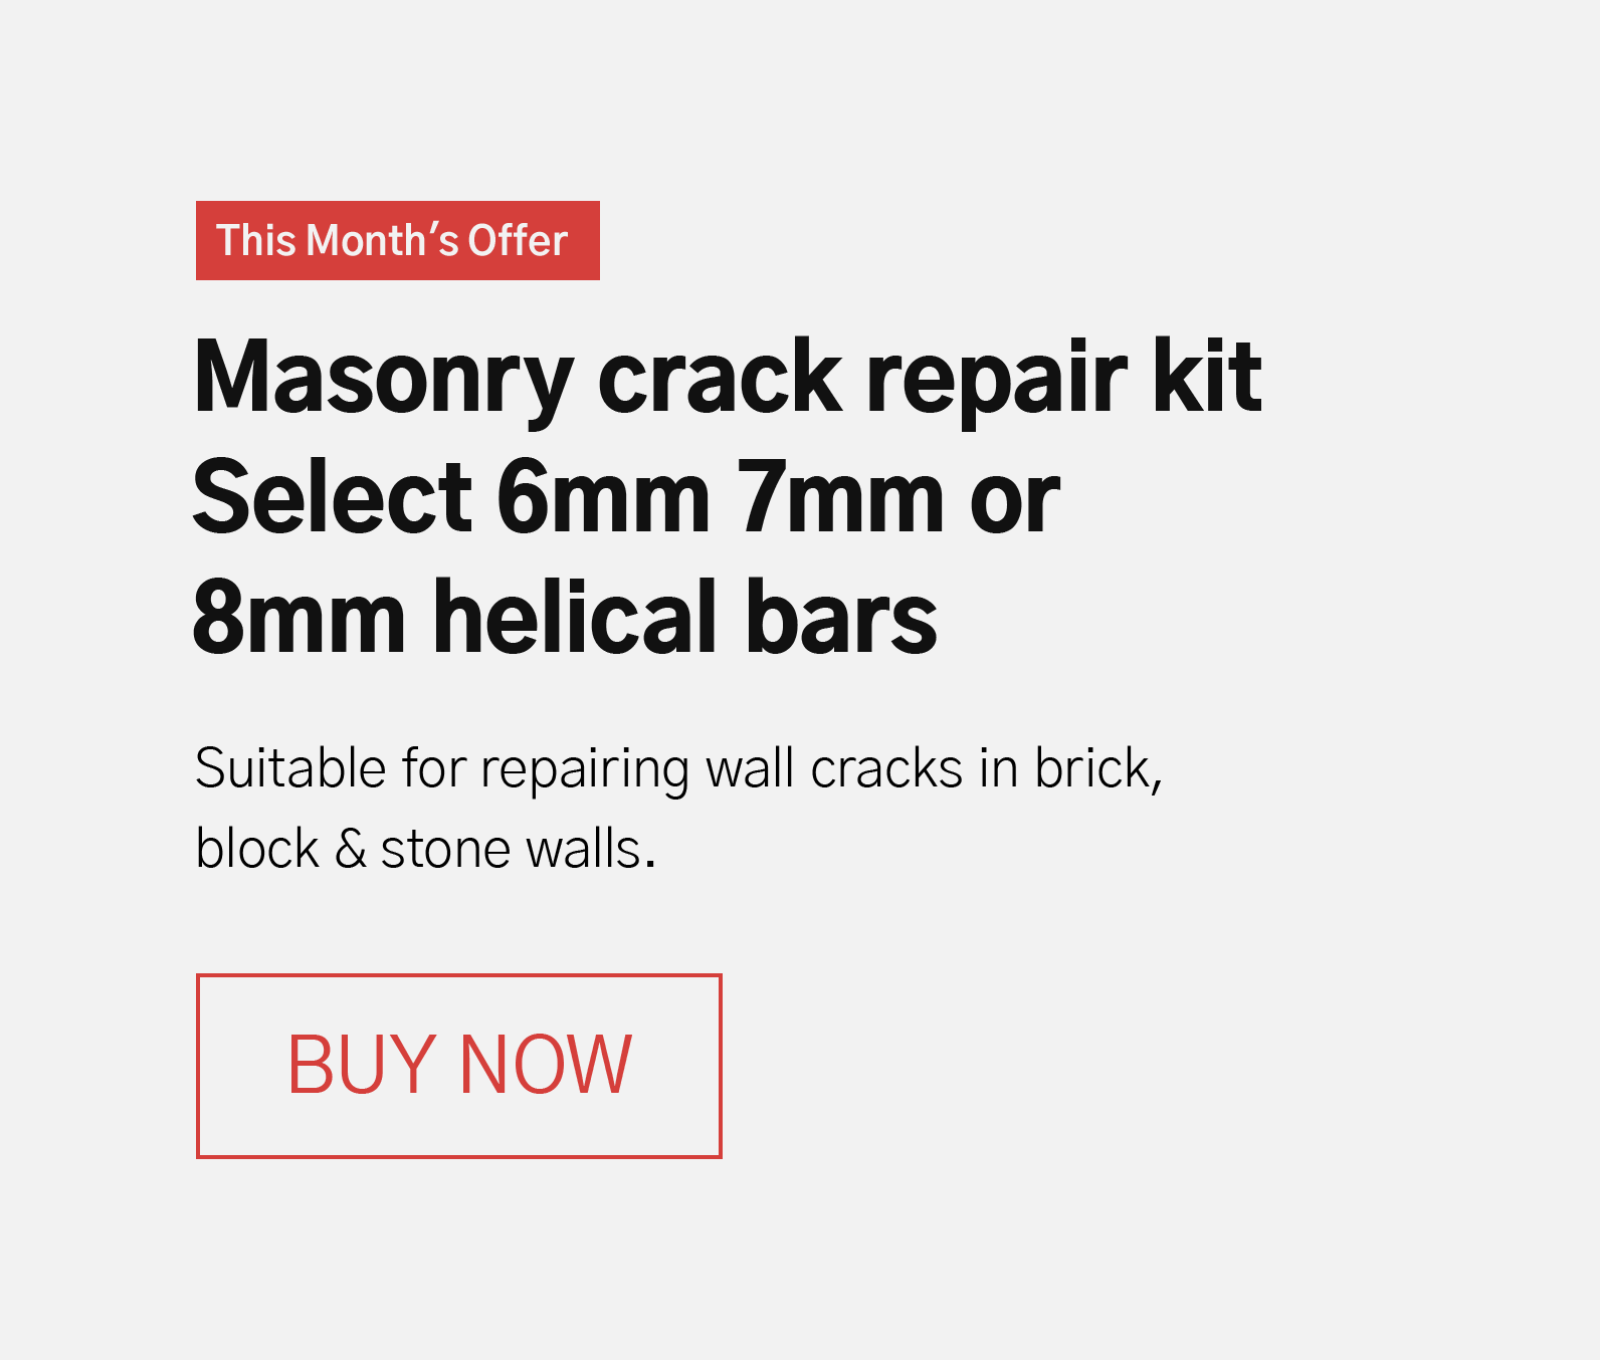 Masonry crack repair kit